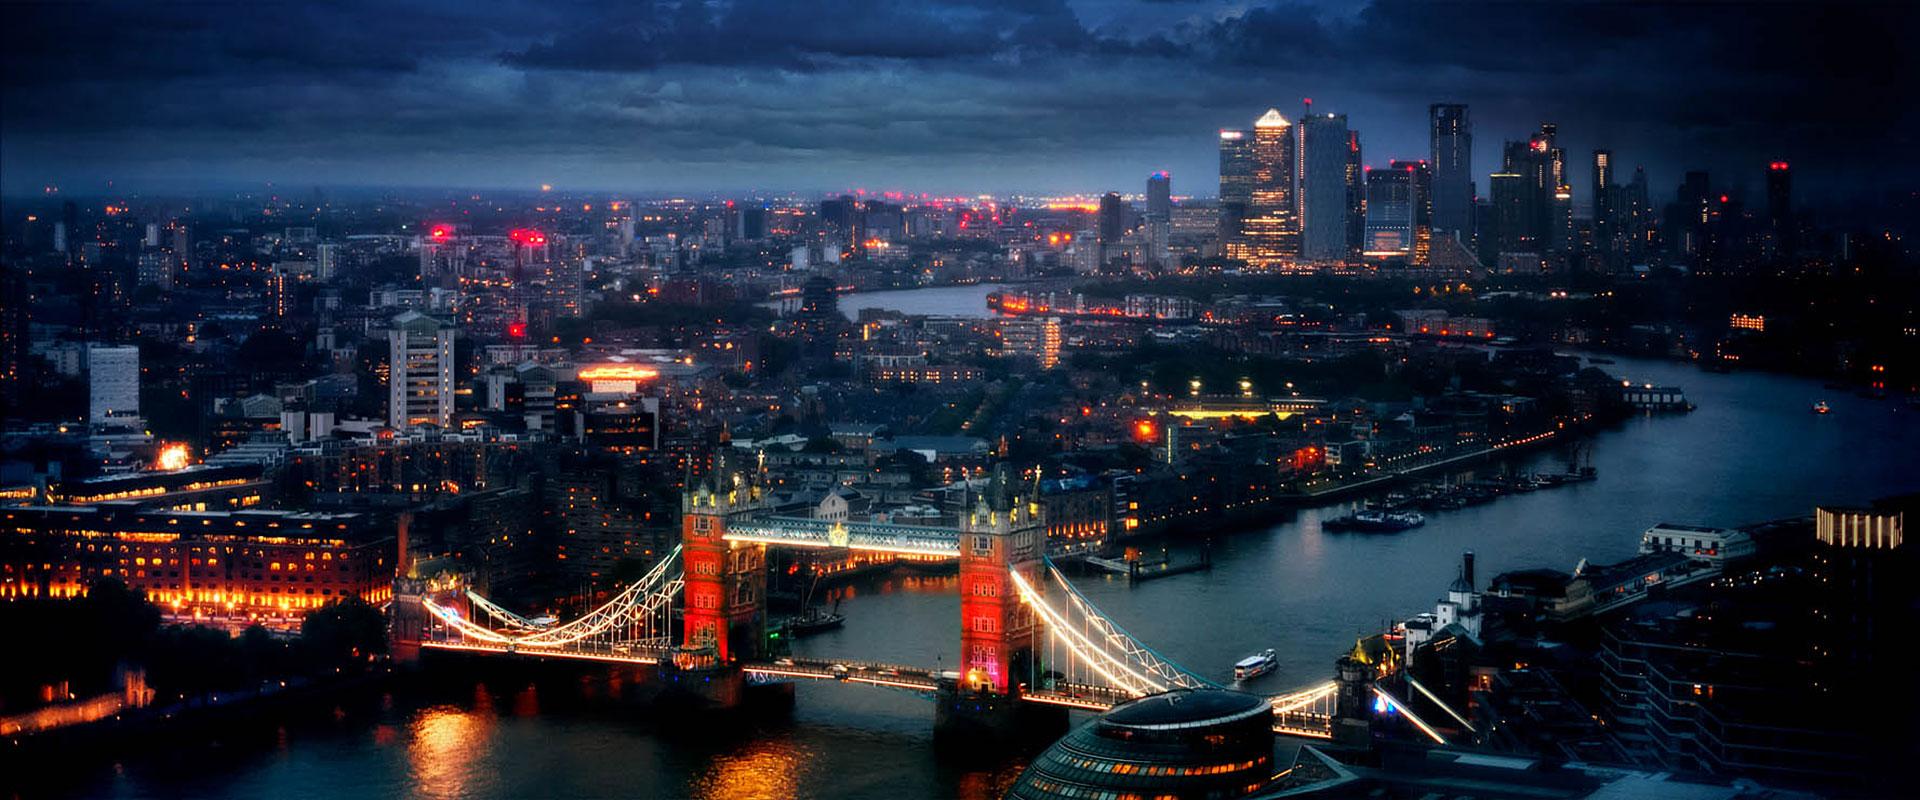 David Drebin Color Photograph - This is London